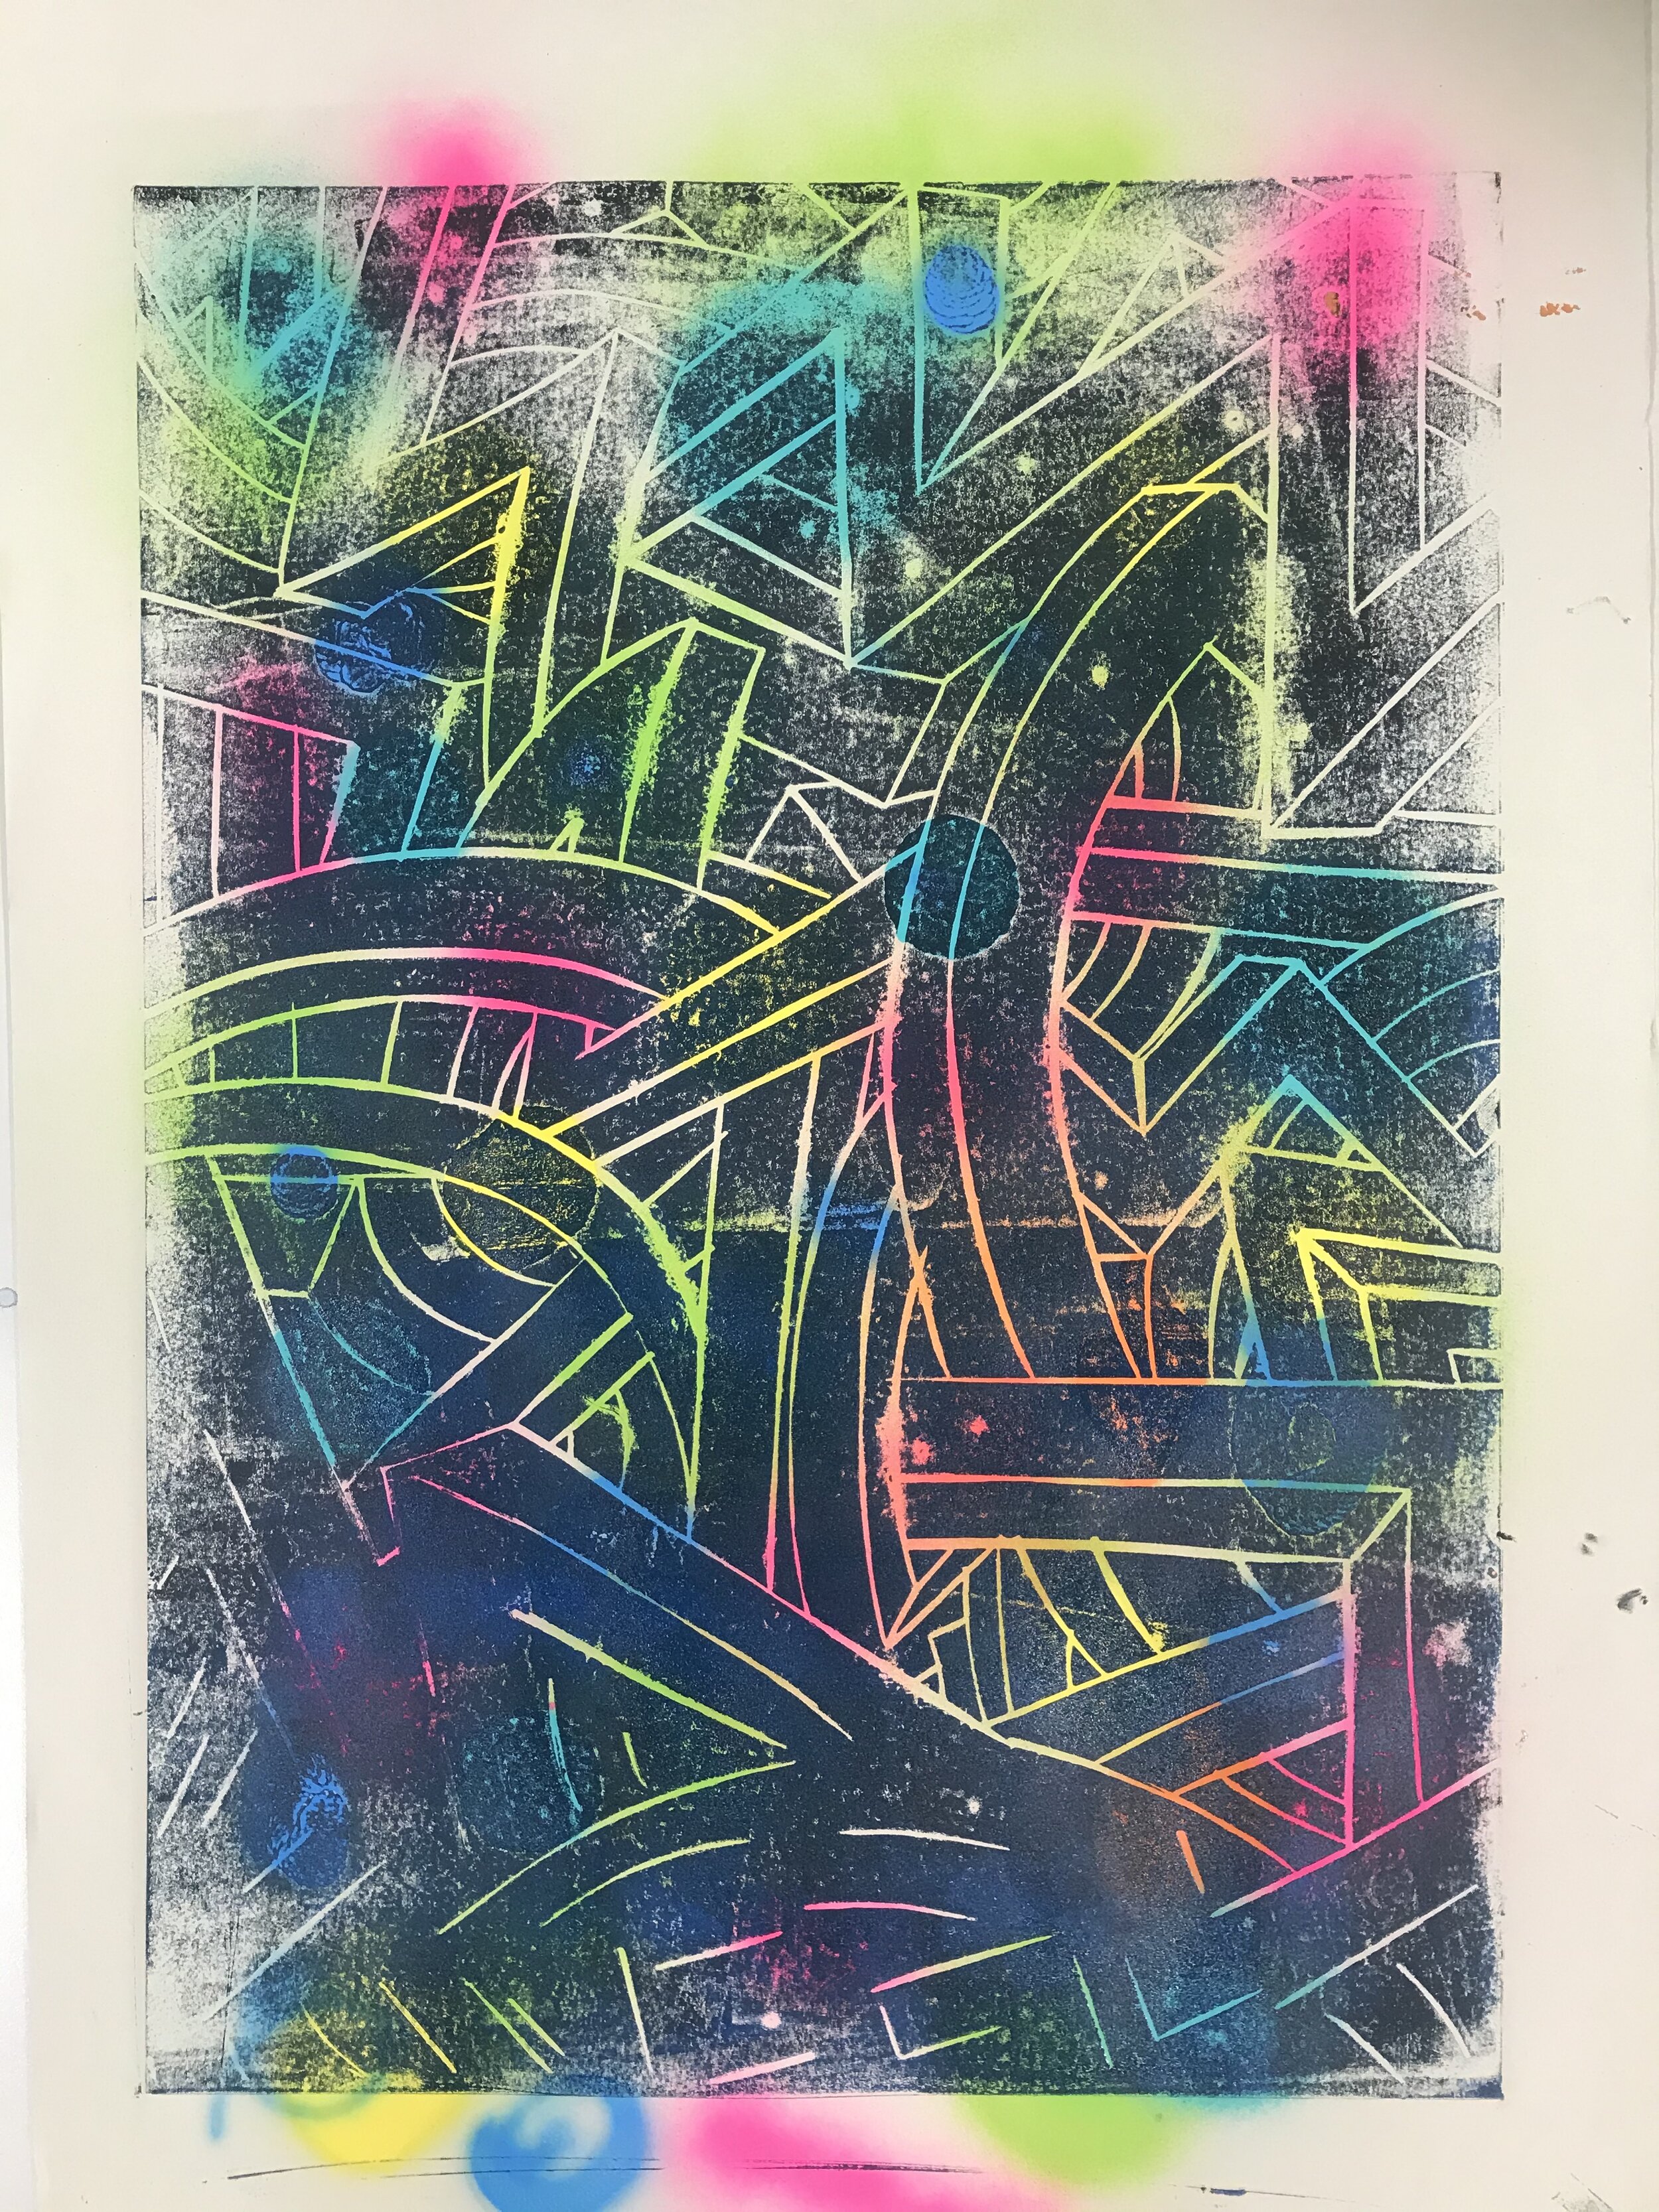 Linocut print and spray paint on newsprint, 59.1 x 42 cm, 2020